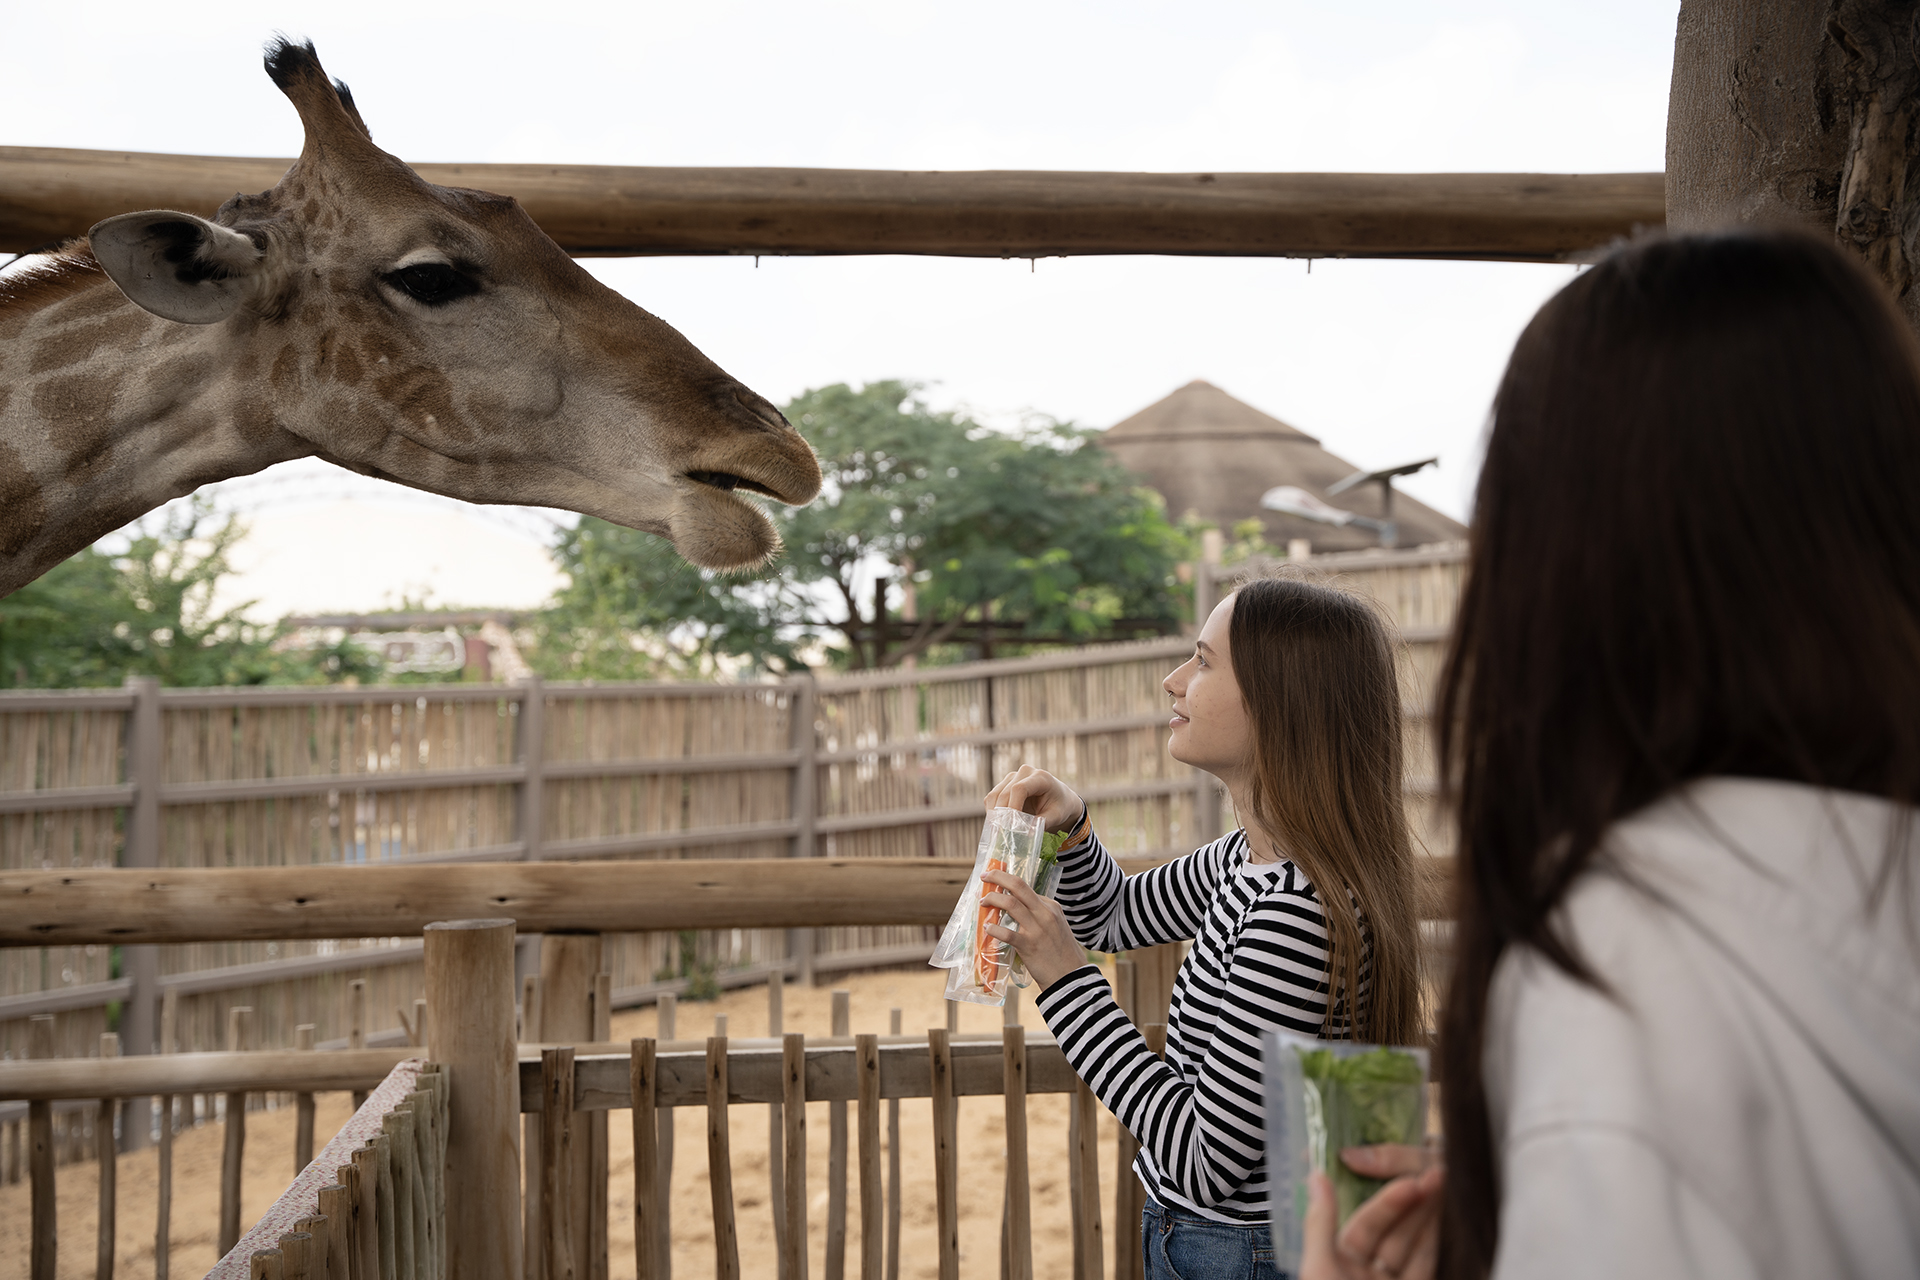 dubai safari park is open today